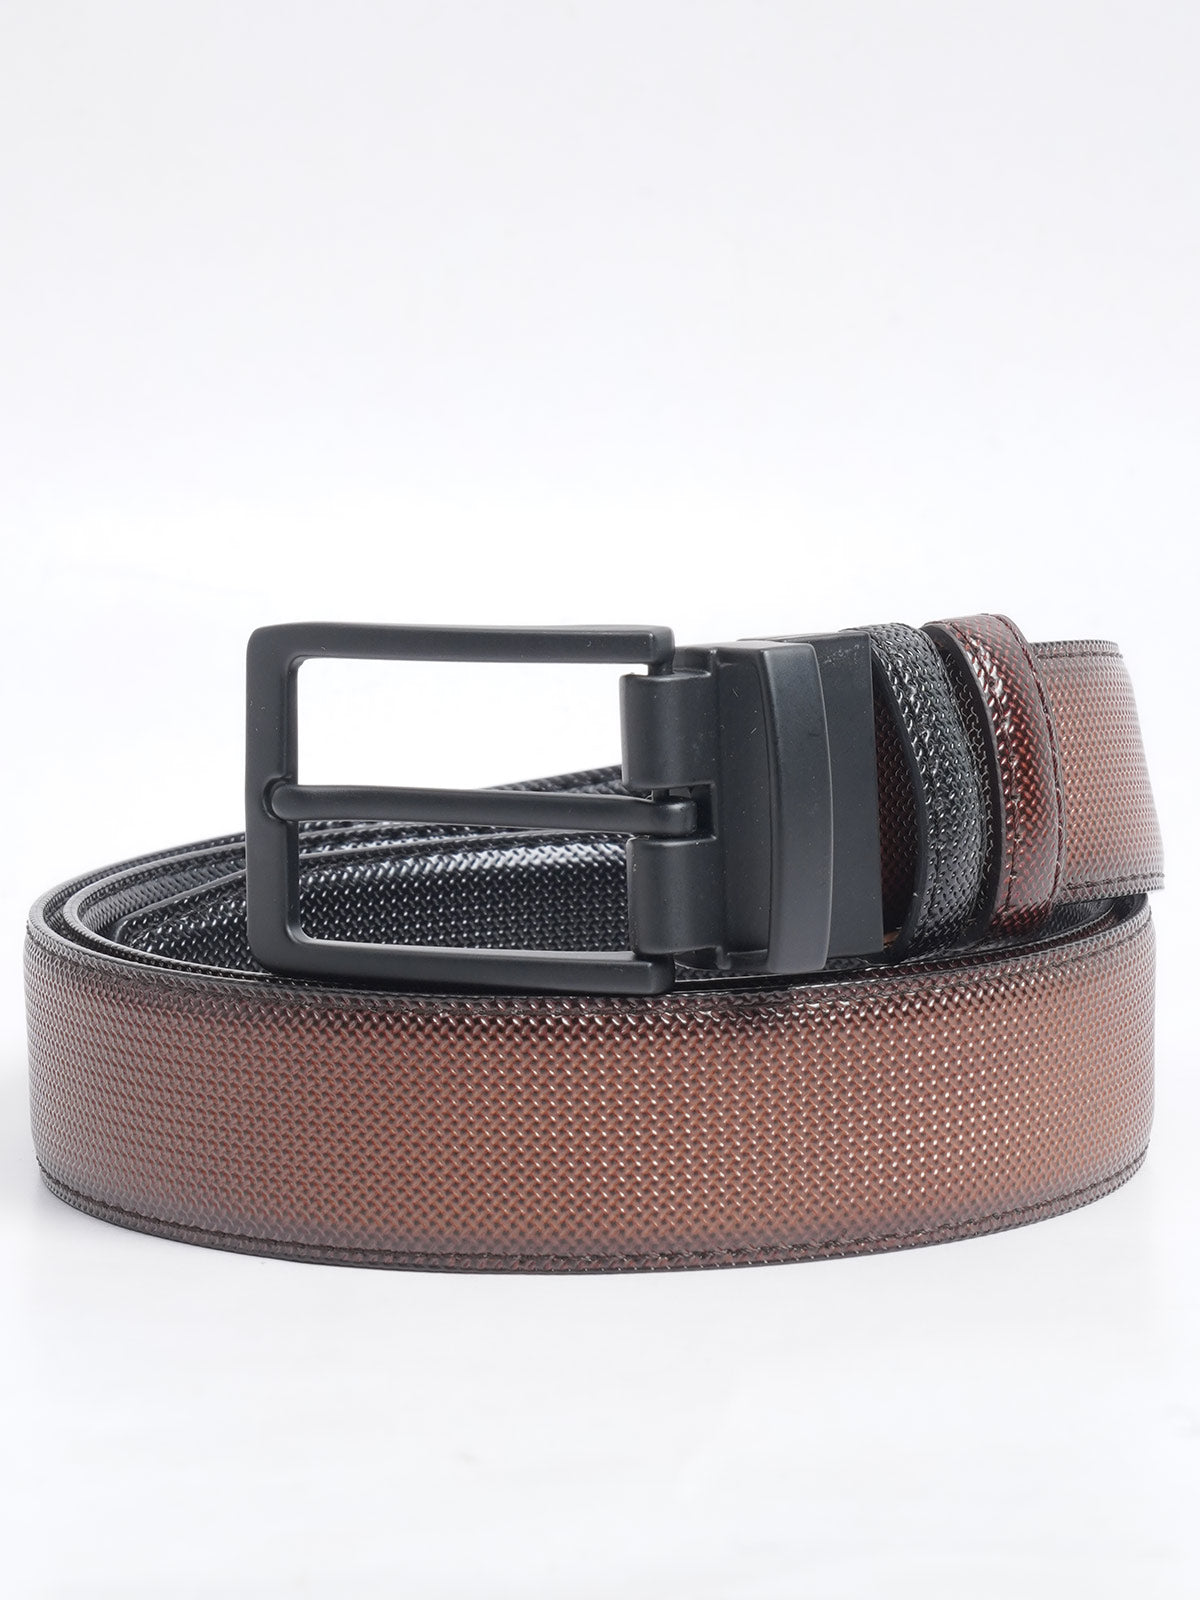 BlackTextured Leather Belt (BELT-659)